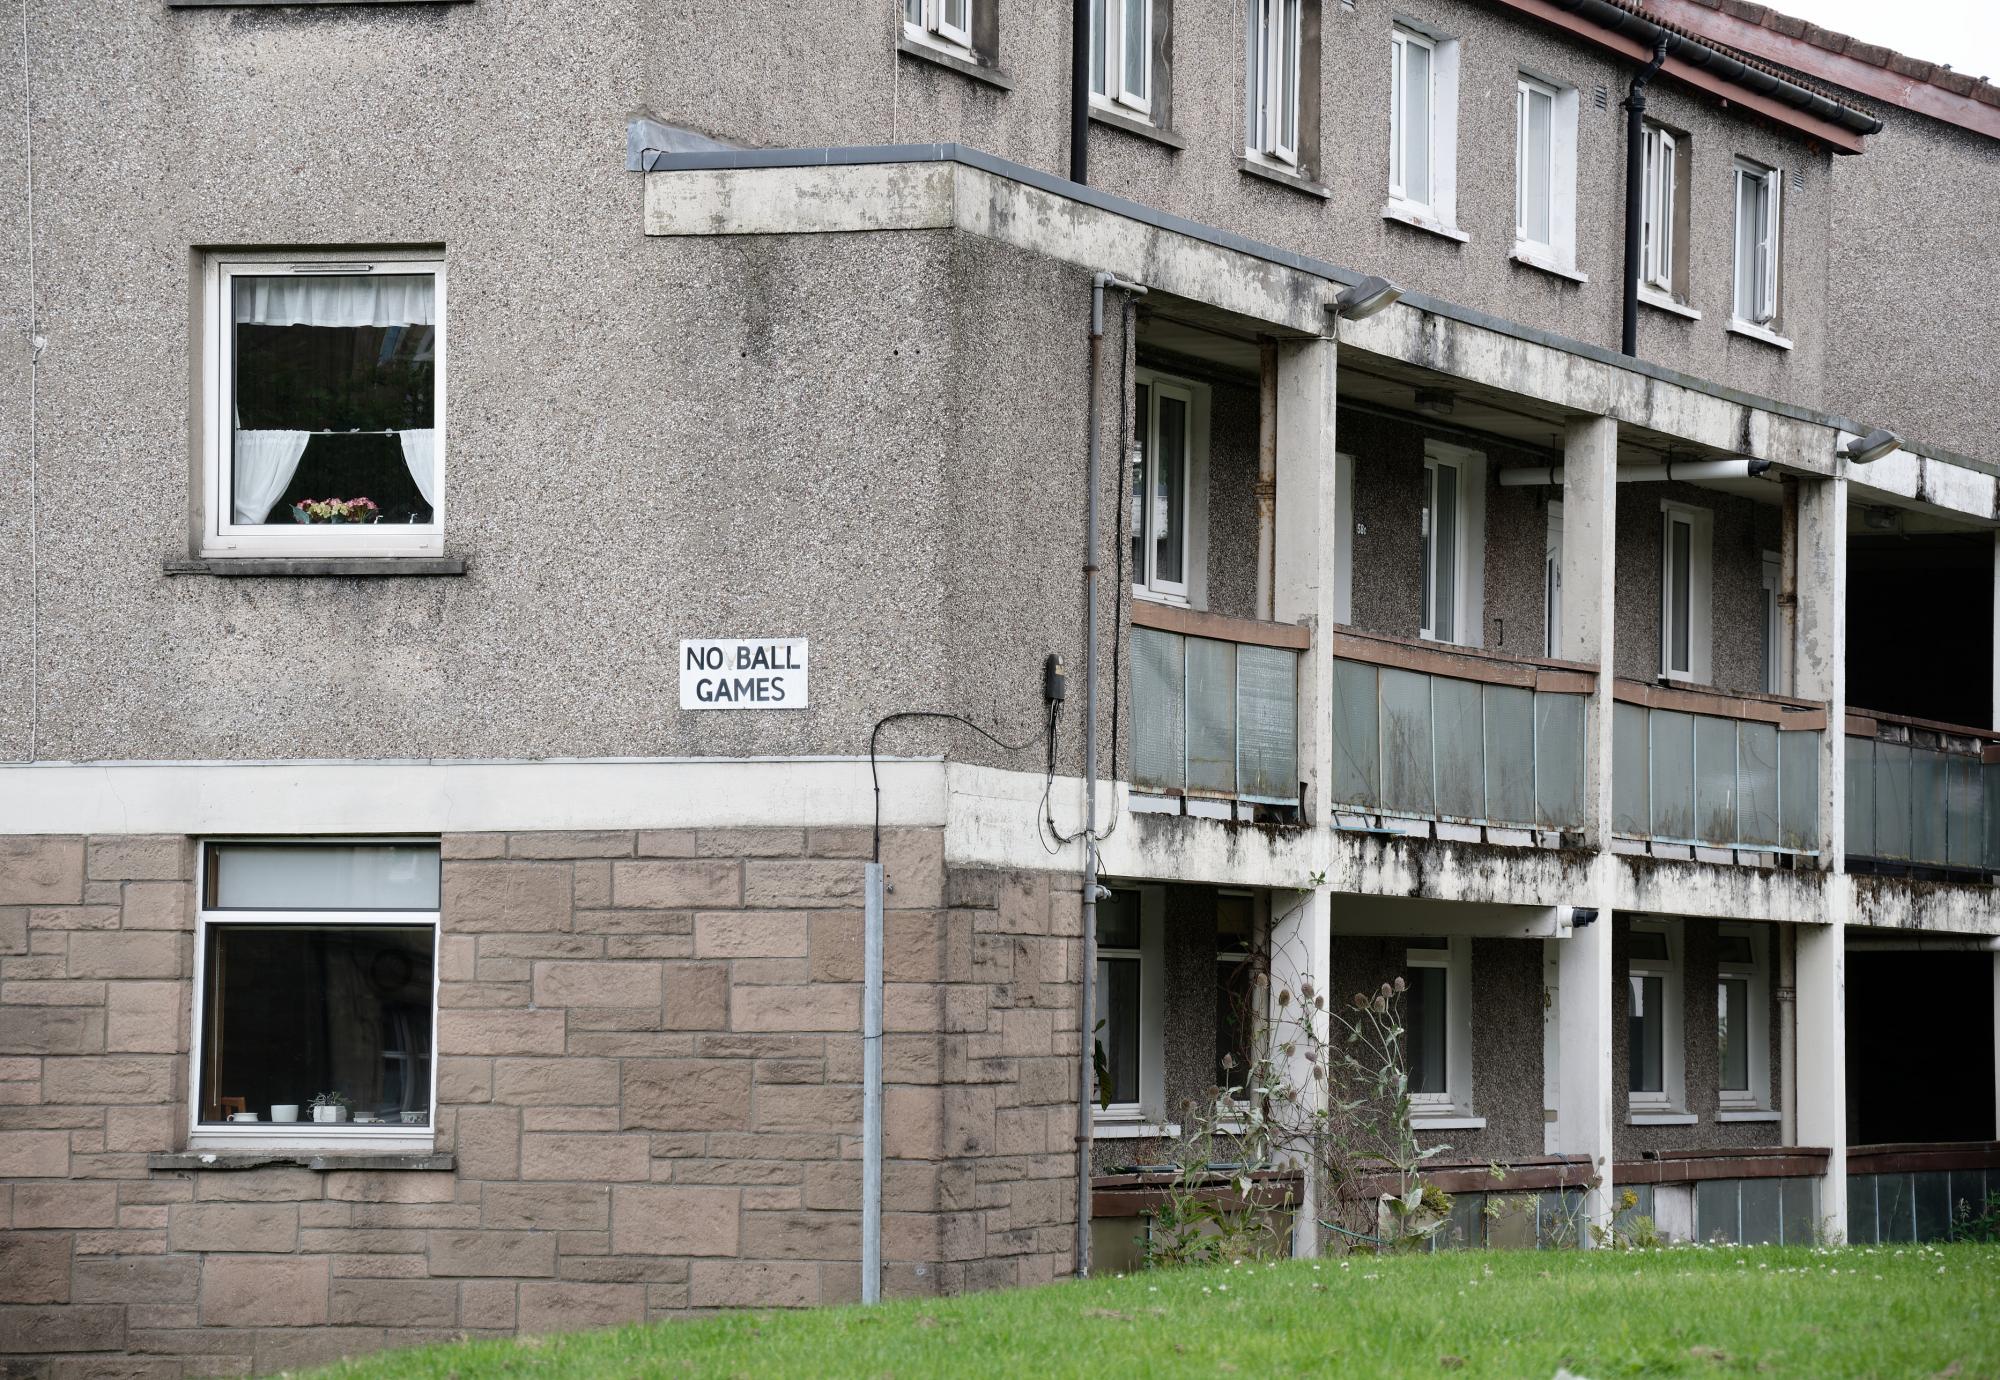 Poor social housing in the UK